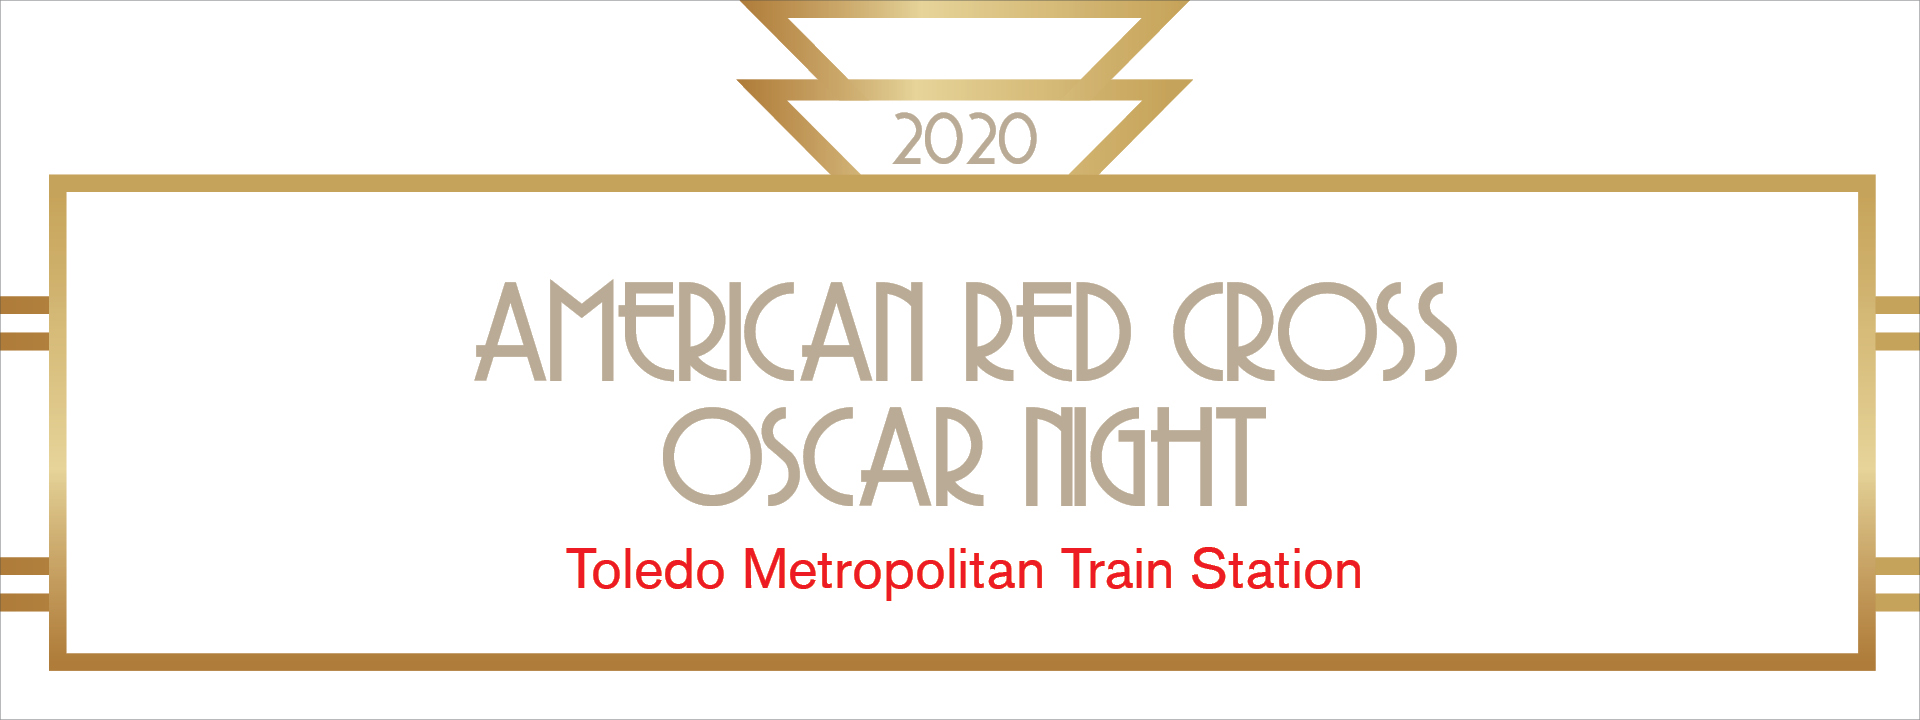 Toledo Ohio Red Cross Oscar Night Event